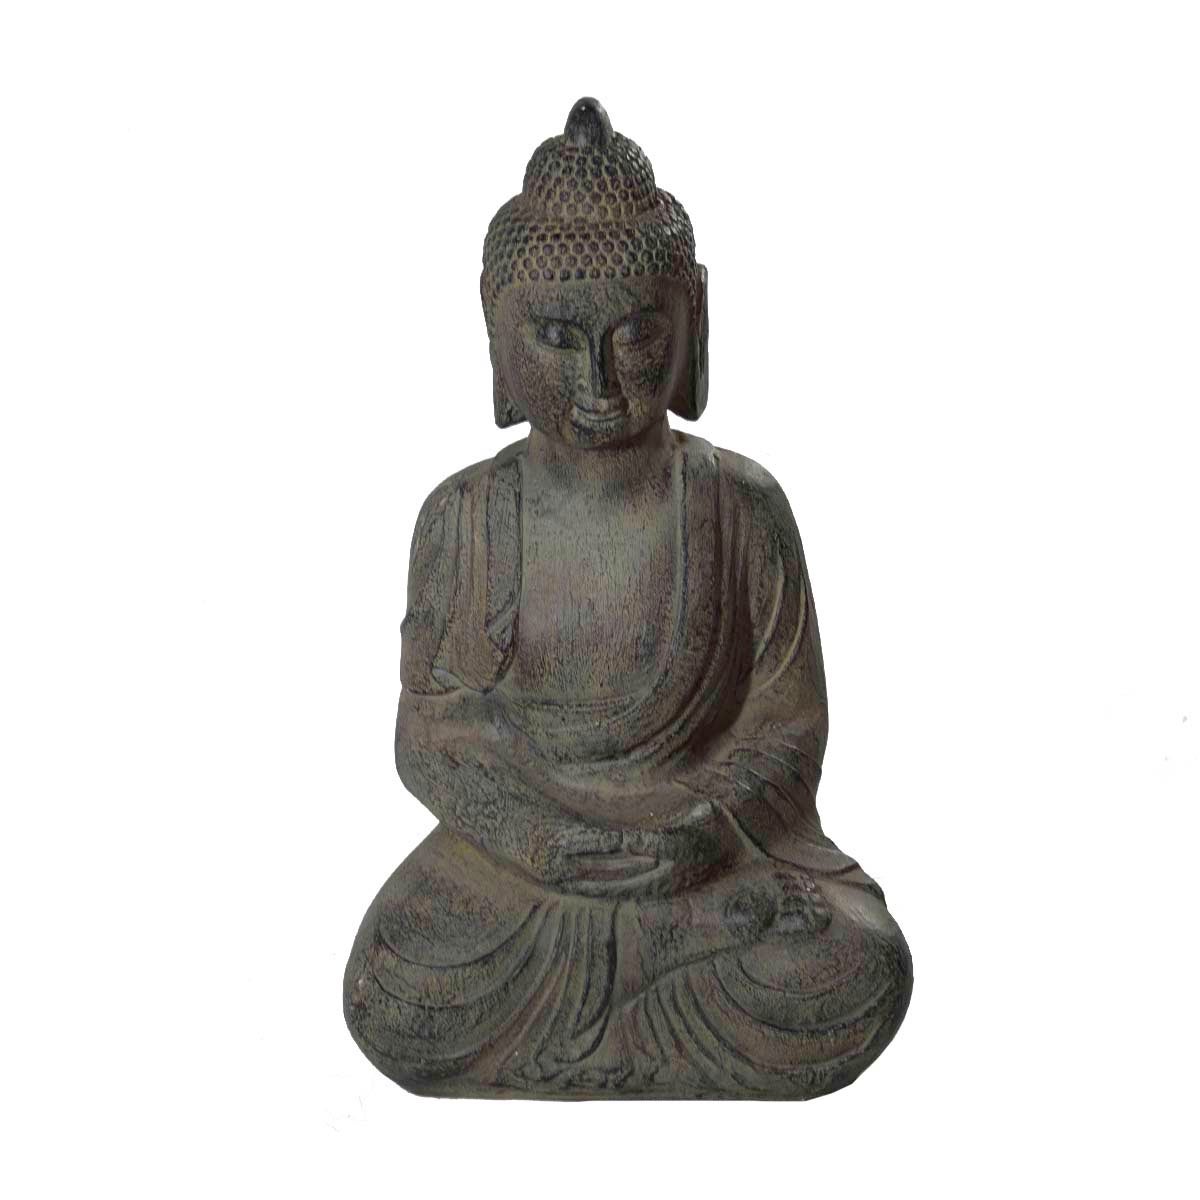 24" Tall Sitting Buddha Statue